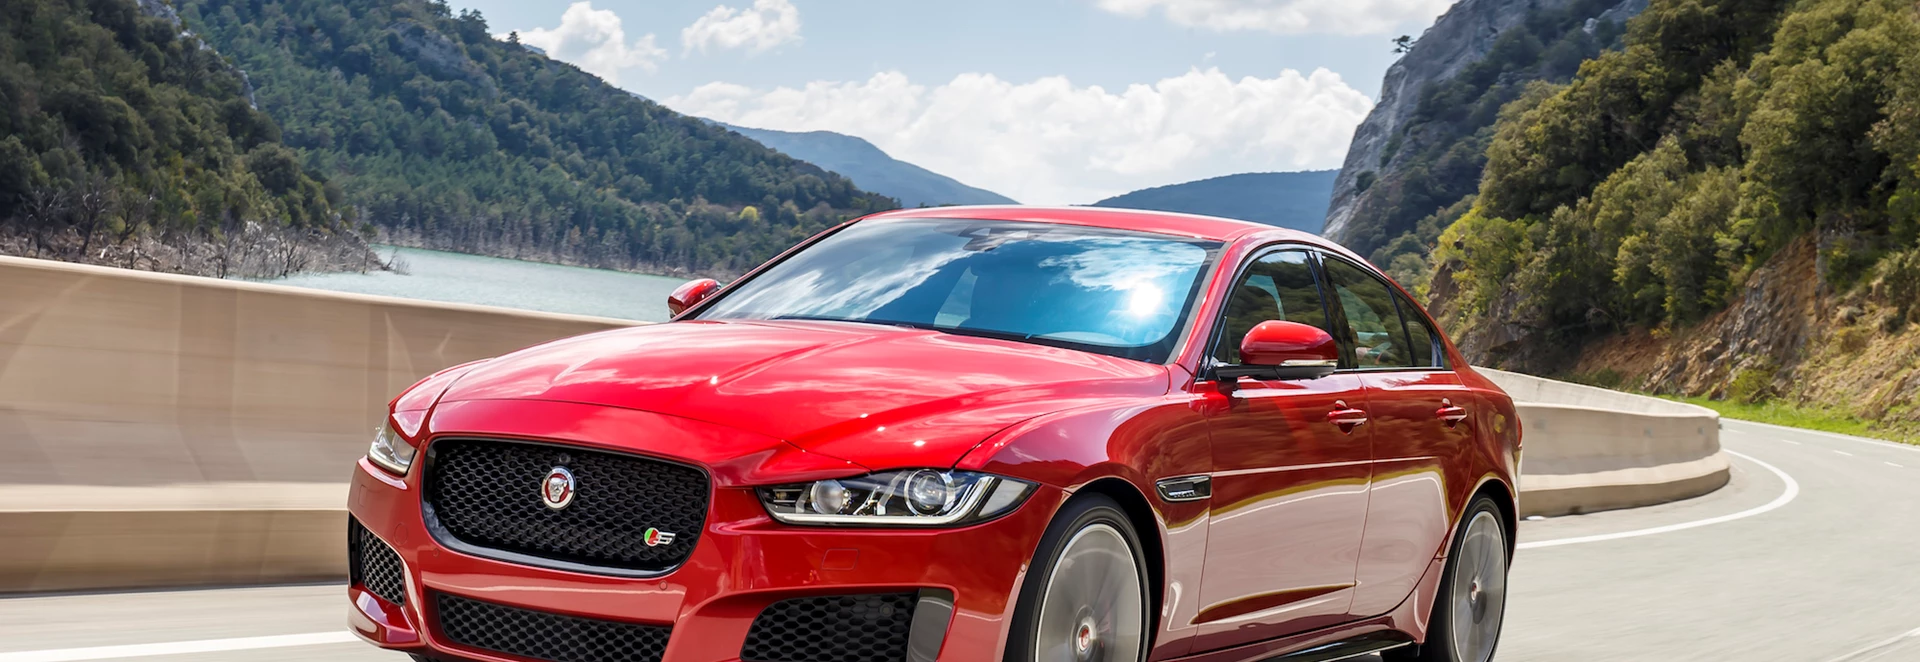 Buyers guide to Jaguar models 